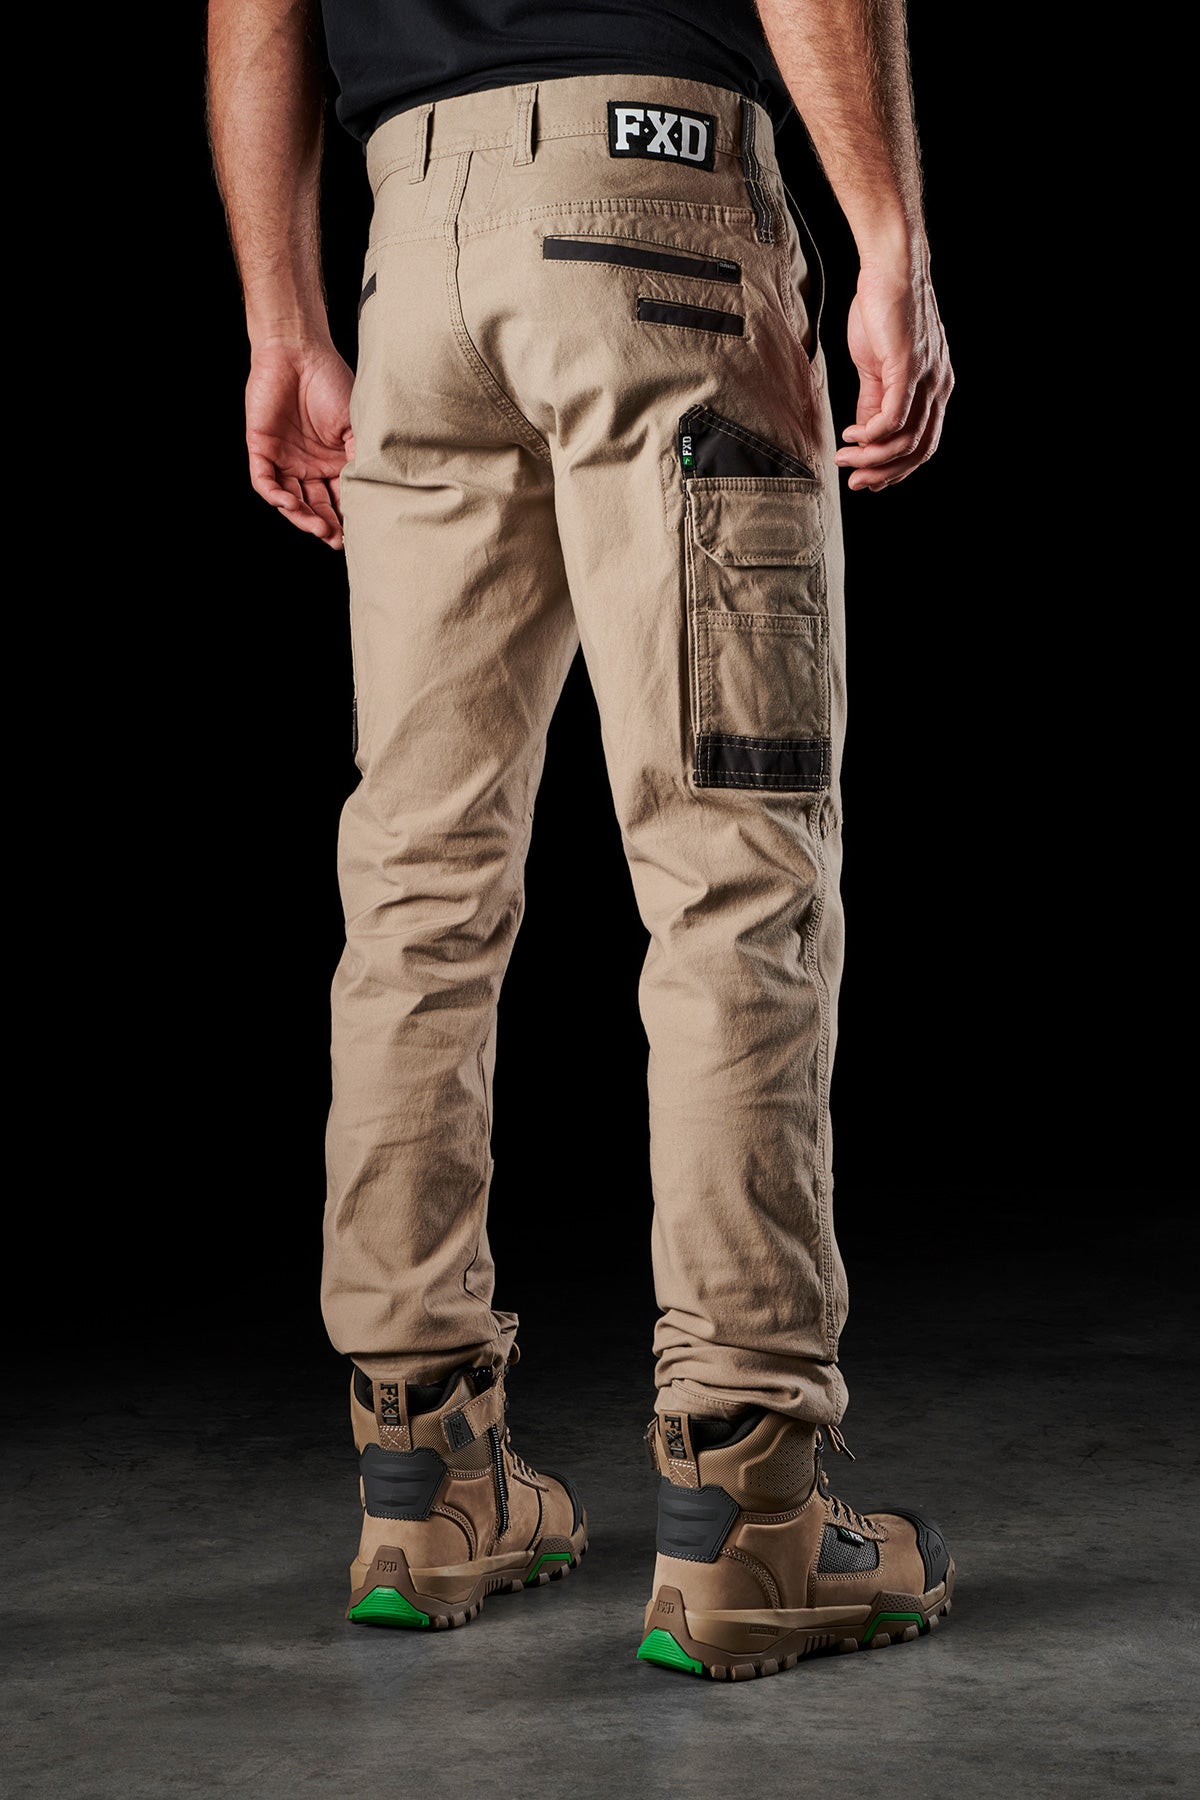 FXD Cargo Work Pants, Workwear Pants in Australia